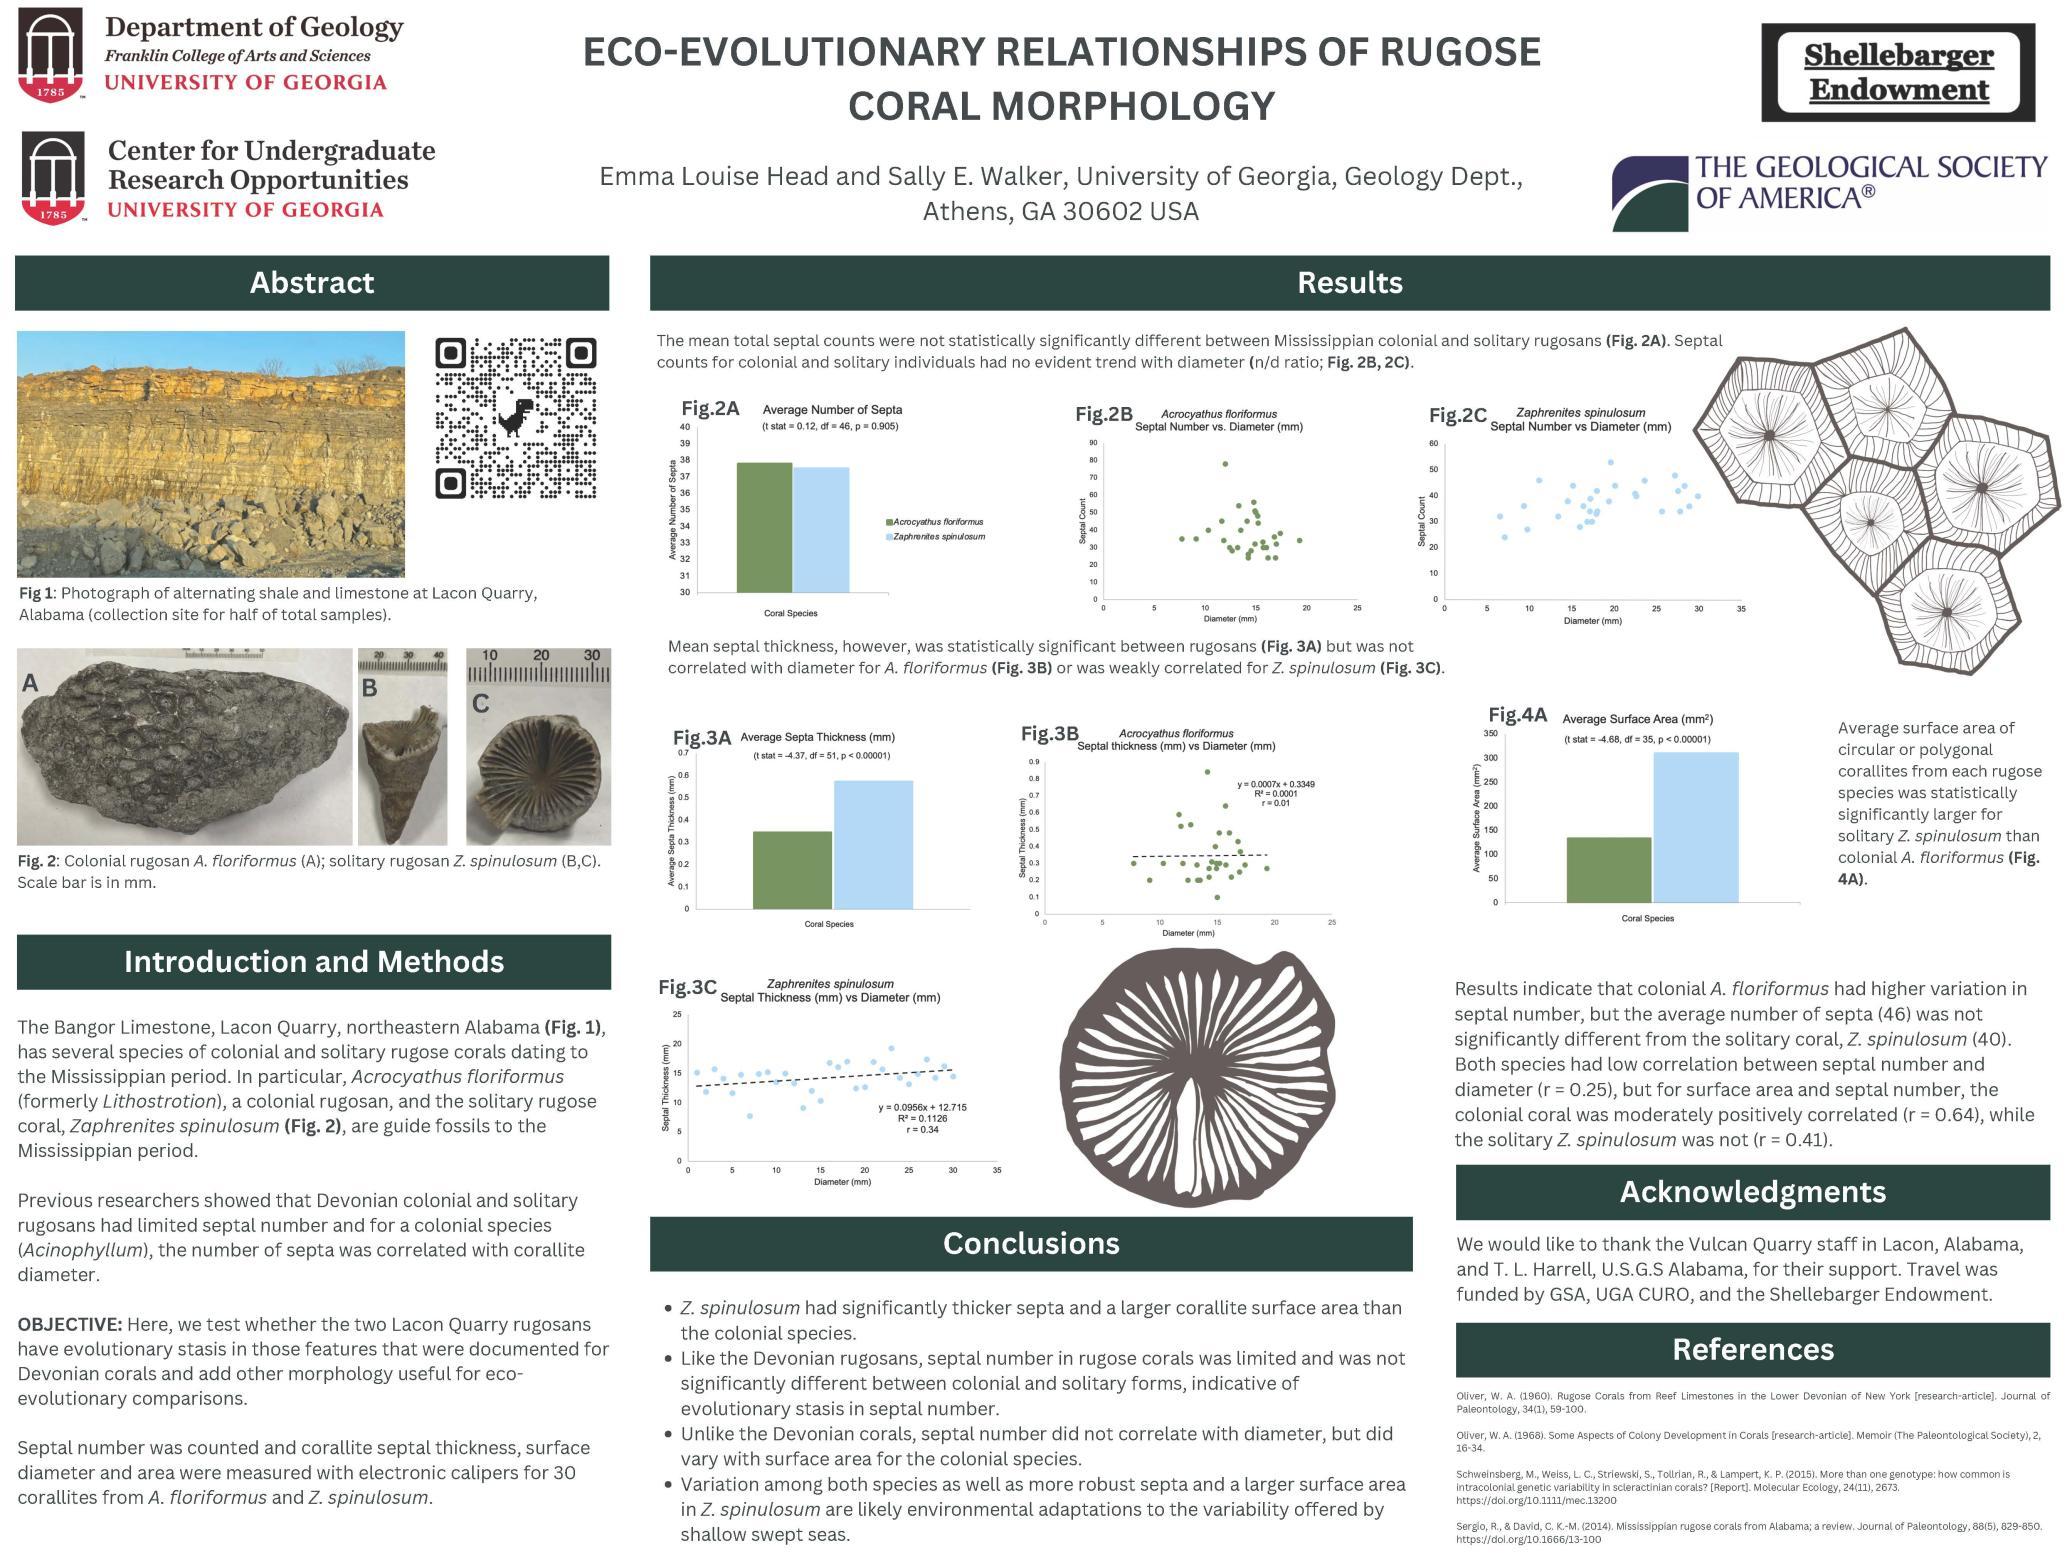 Emma Head - ECO-Evolutionary relationships of Rugose Coral Morphology